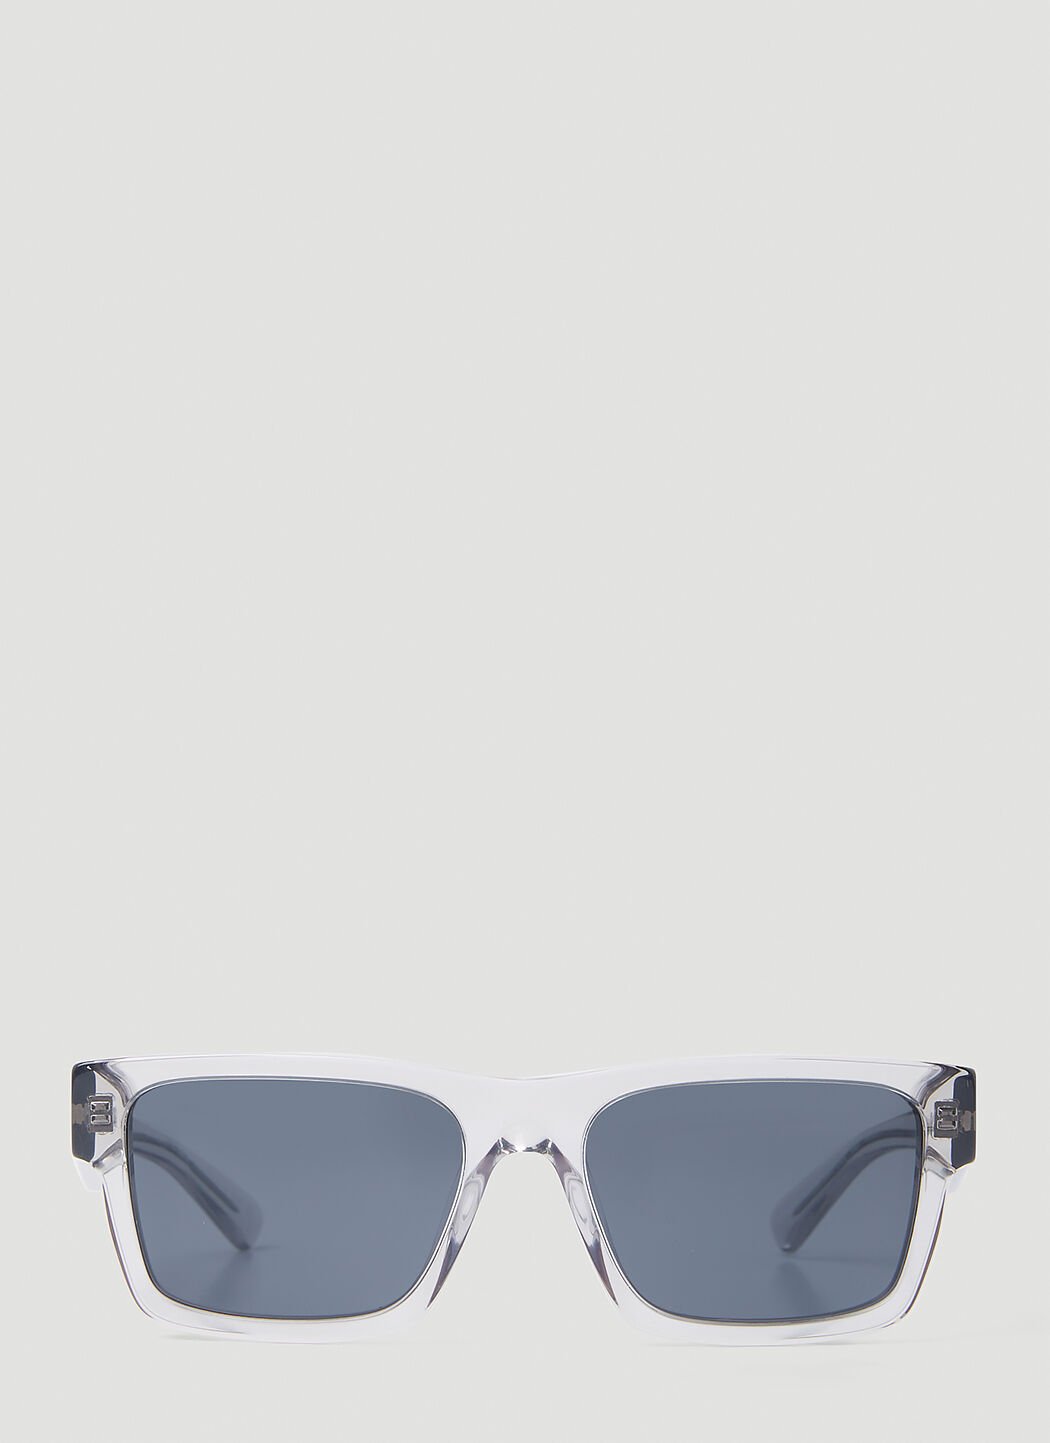 Balenciaga Square Sunglasses Black bcs0253001